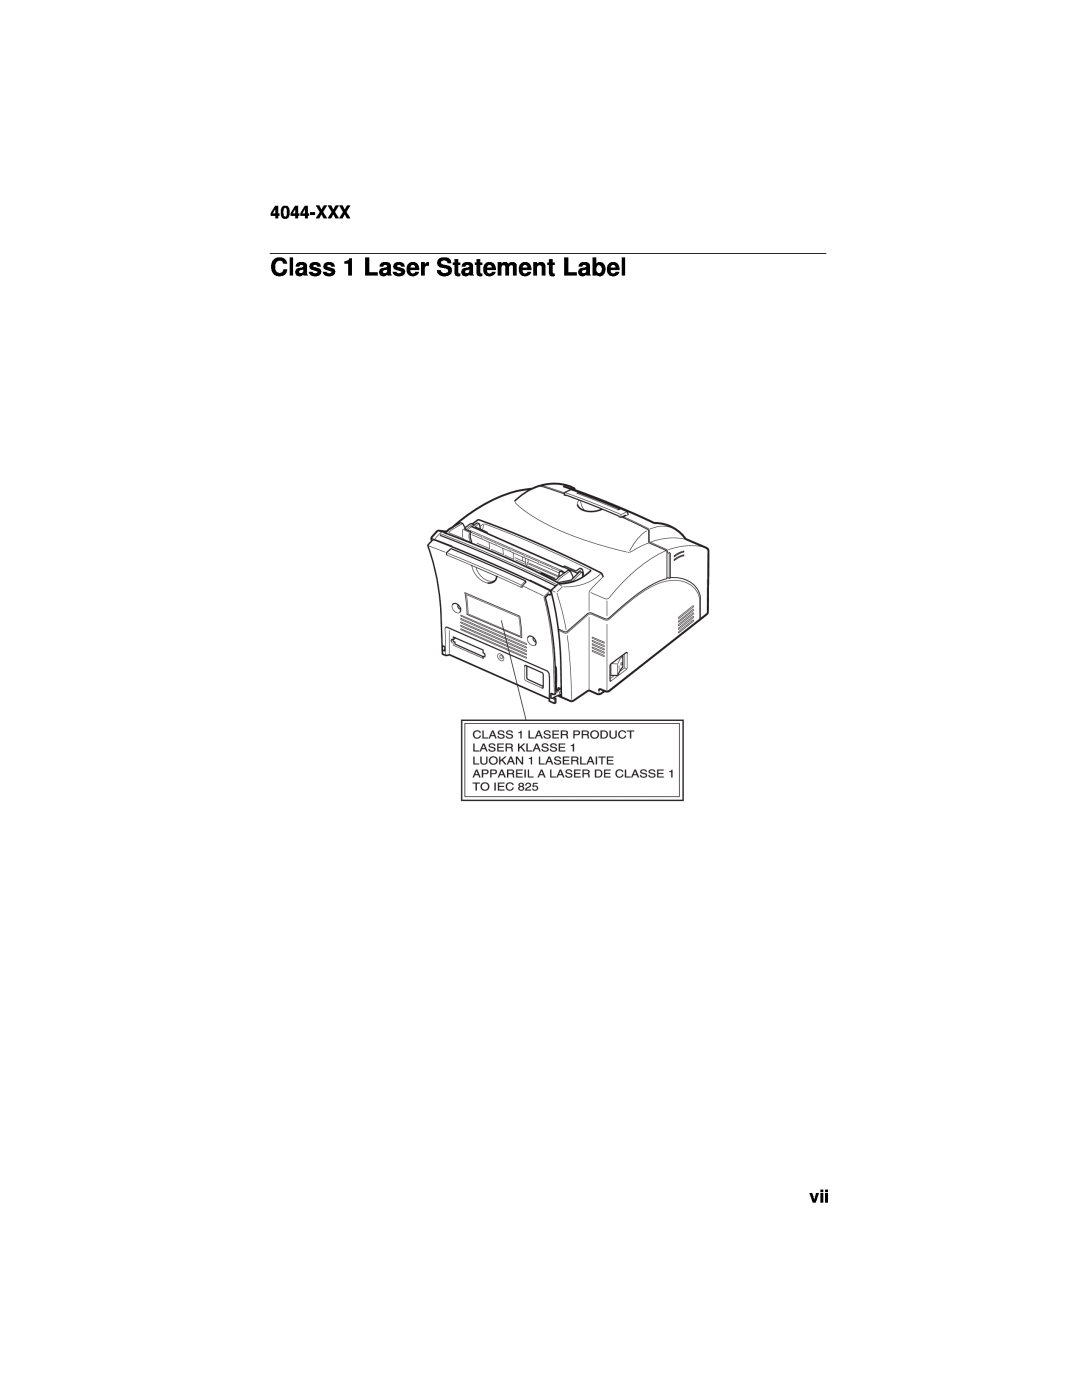 Lexmark E310 manual Class 1 Laser Statement Label, 4044-XXX 